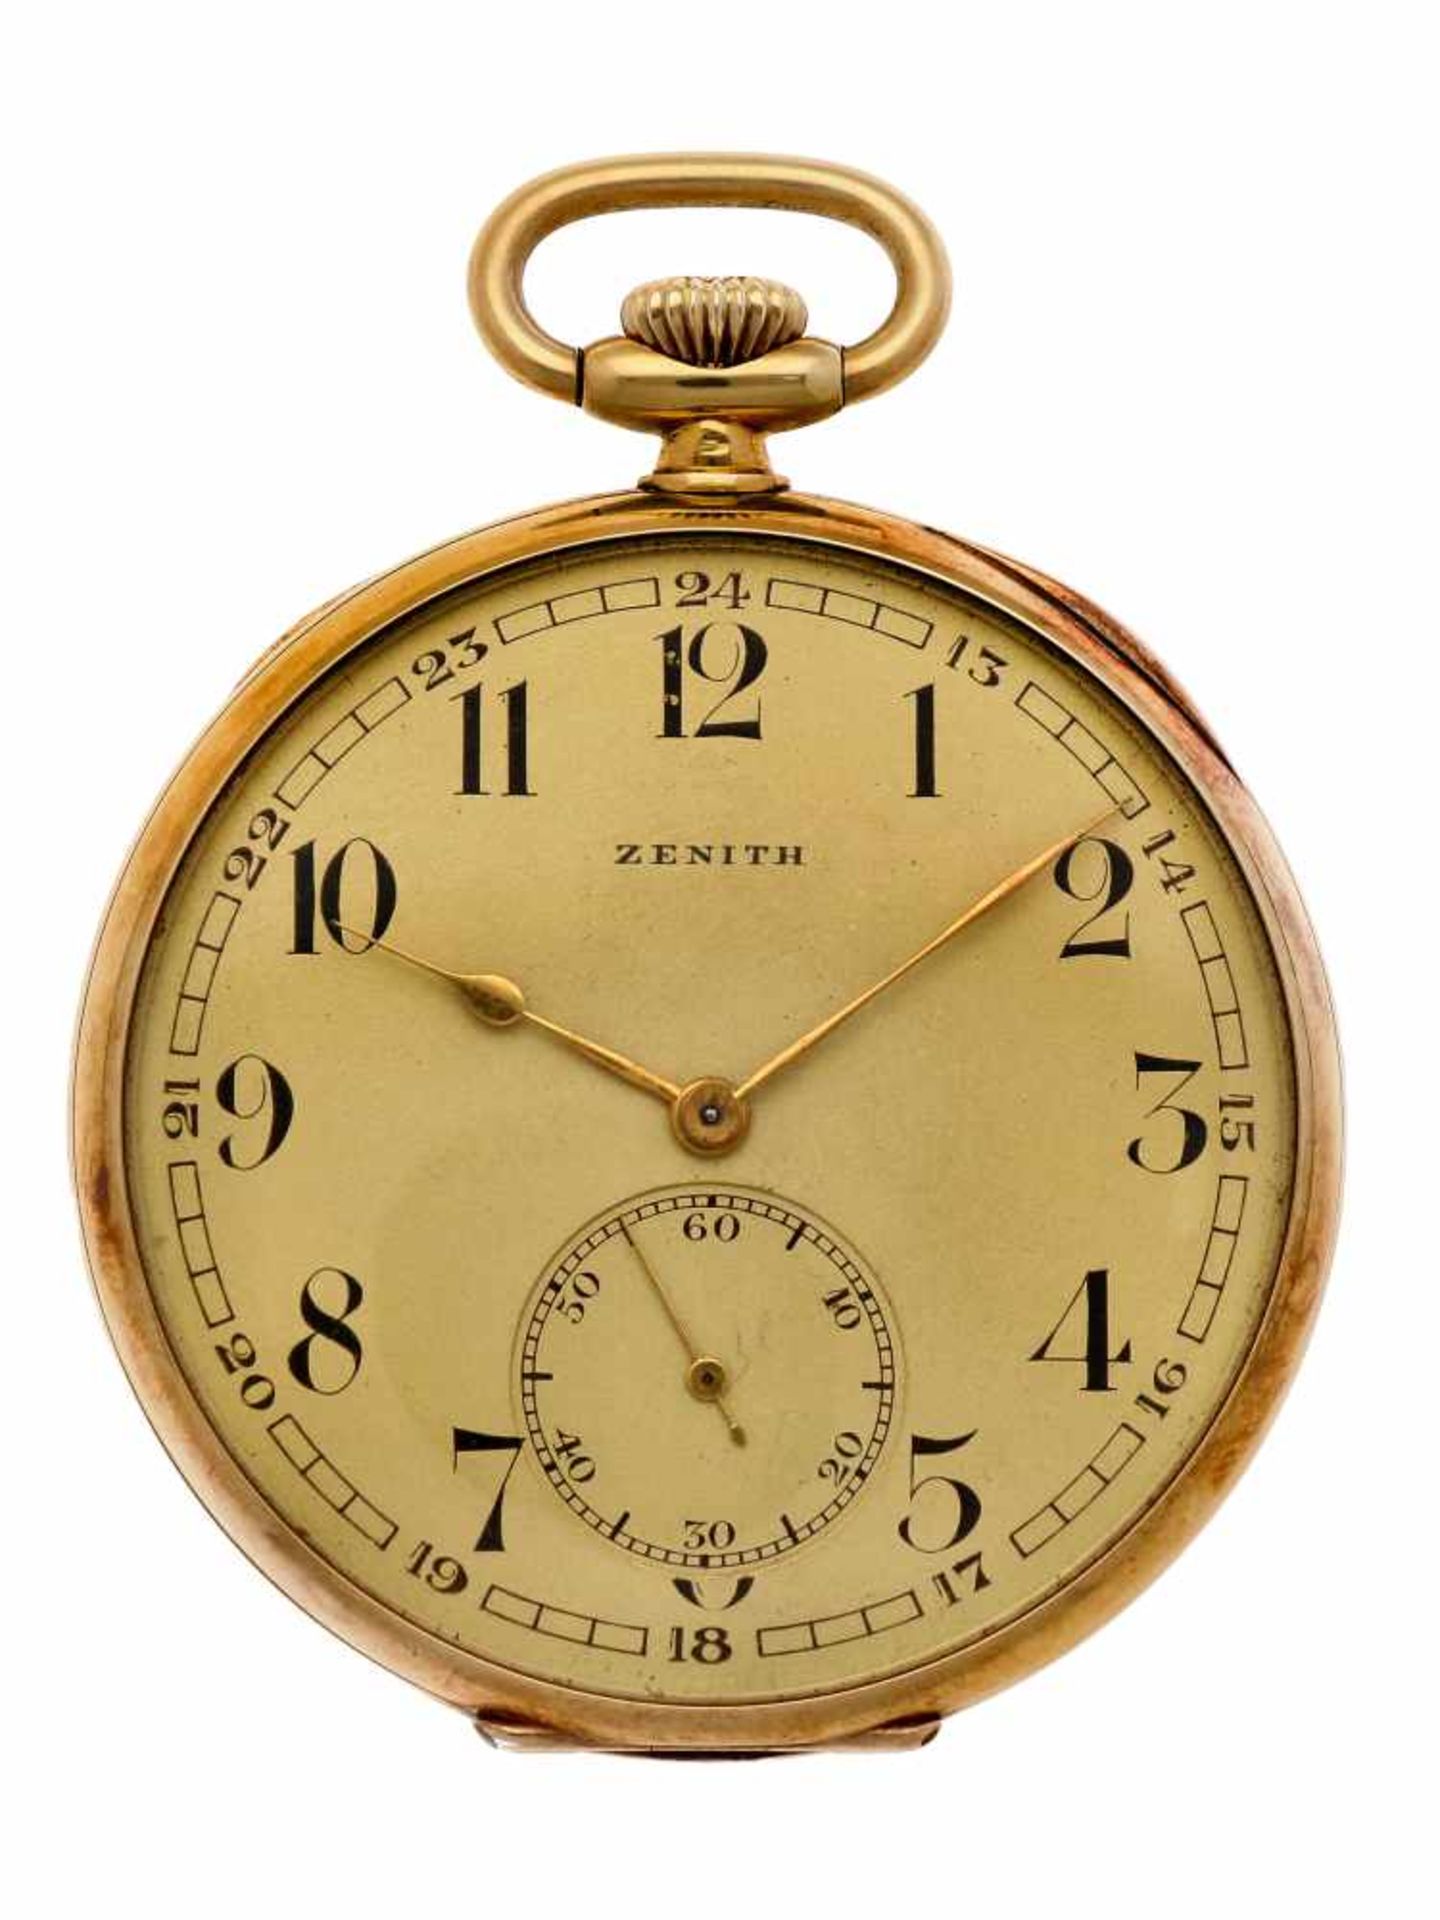 Pocket watch Zenith gold - Men's pocket watch - Manual winding - Ca. 1901.